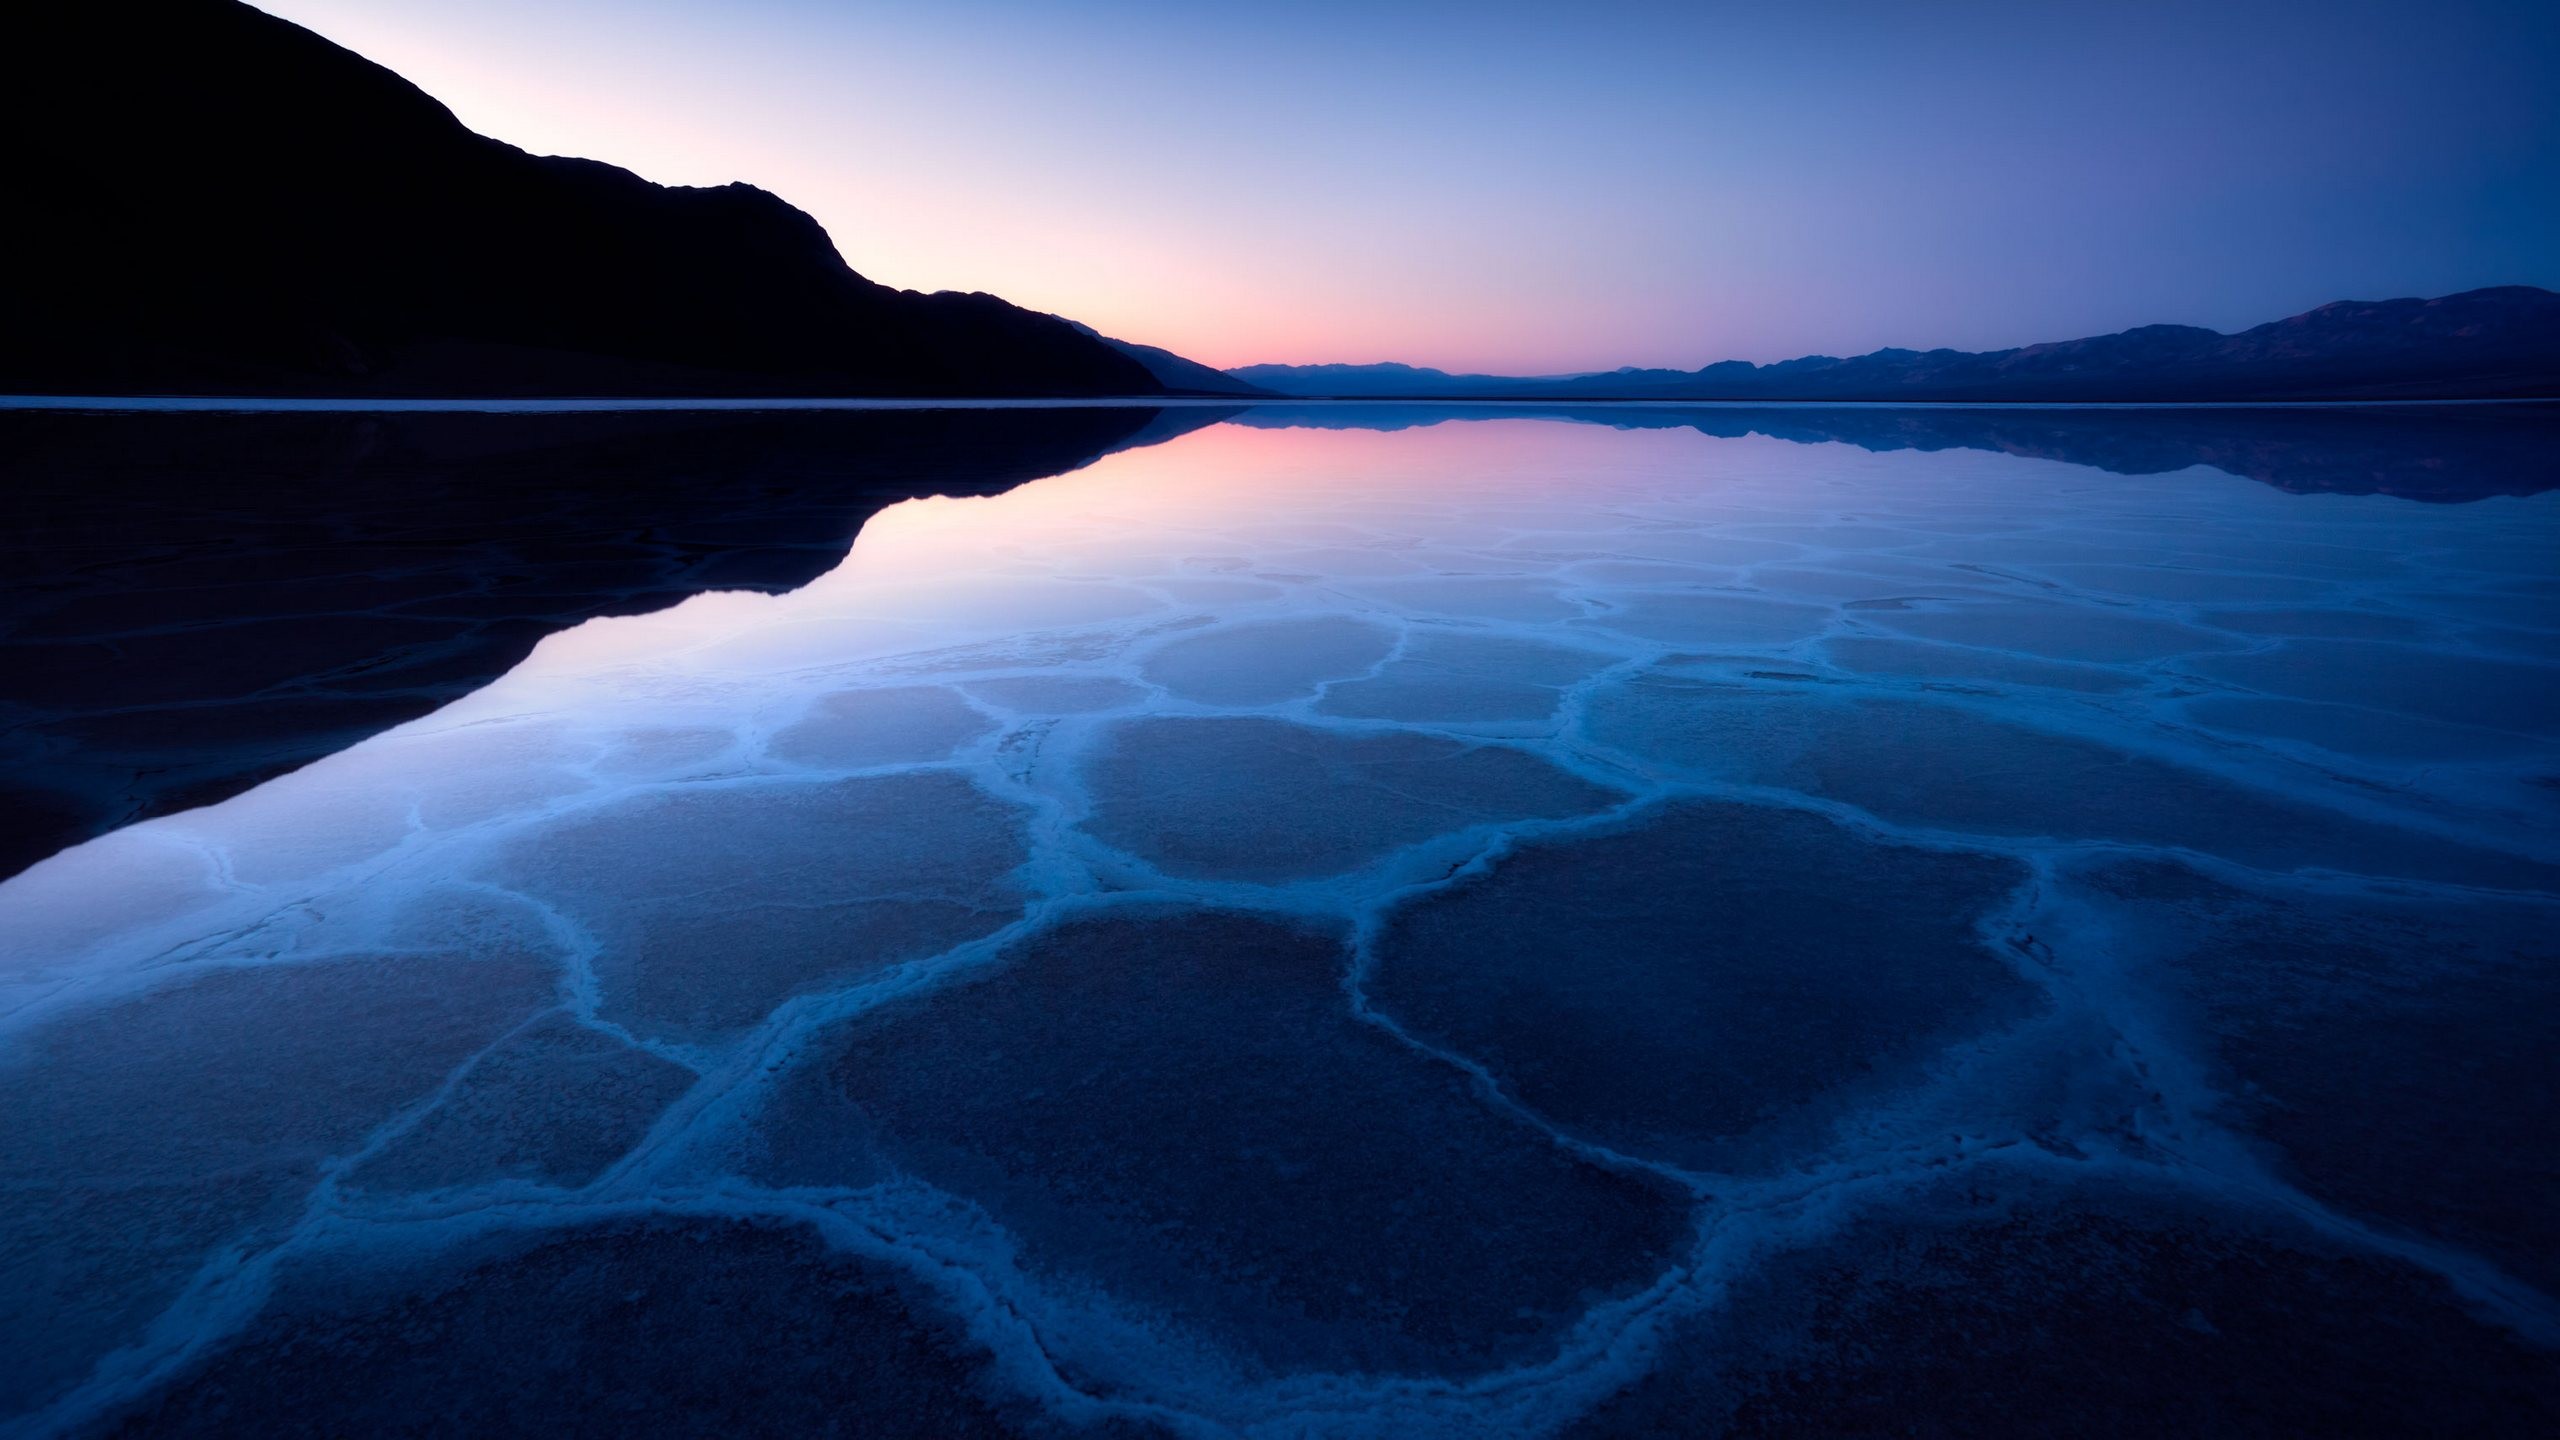 General 2560x1440 photography landscape nature water lake blue calm dusk